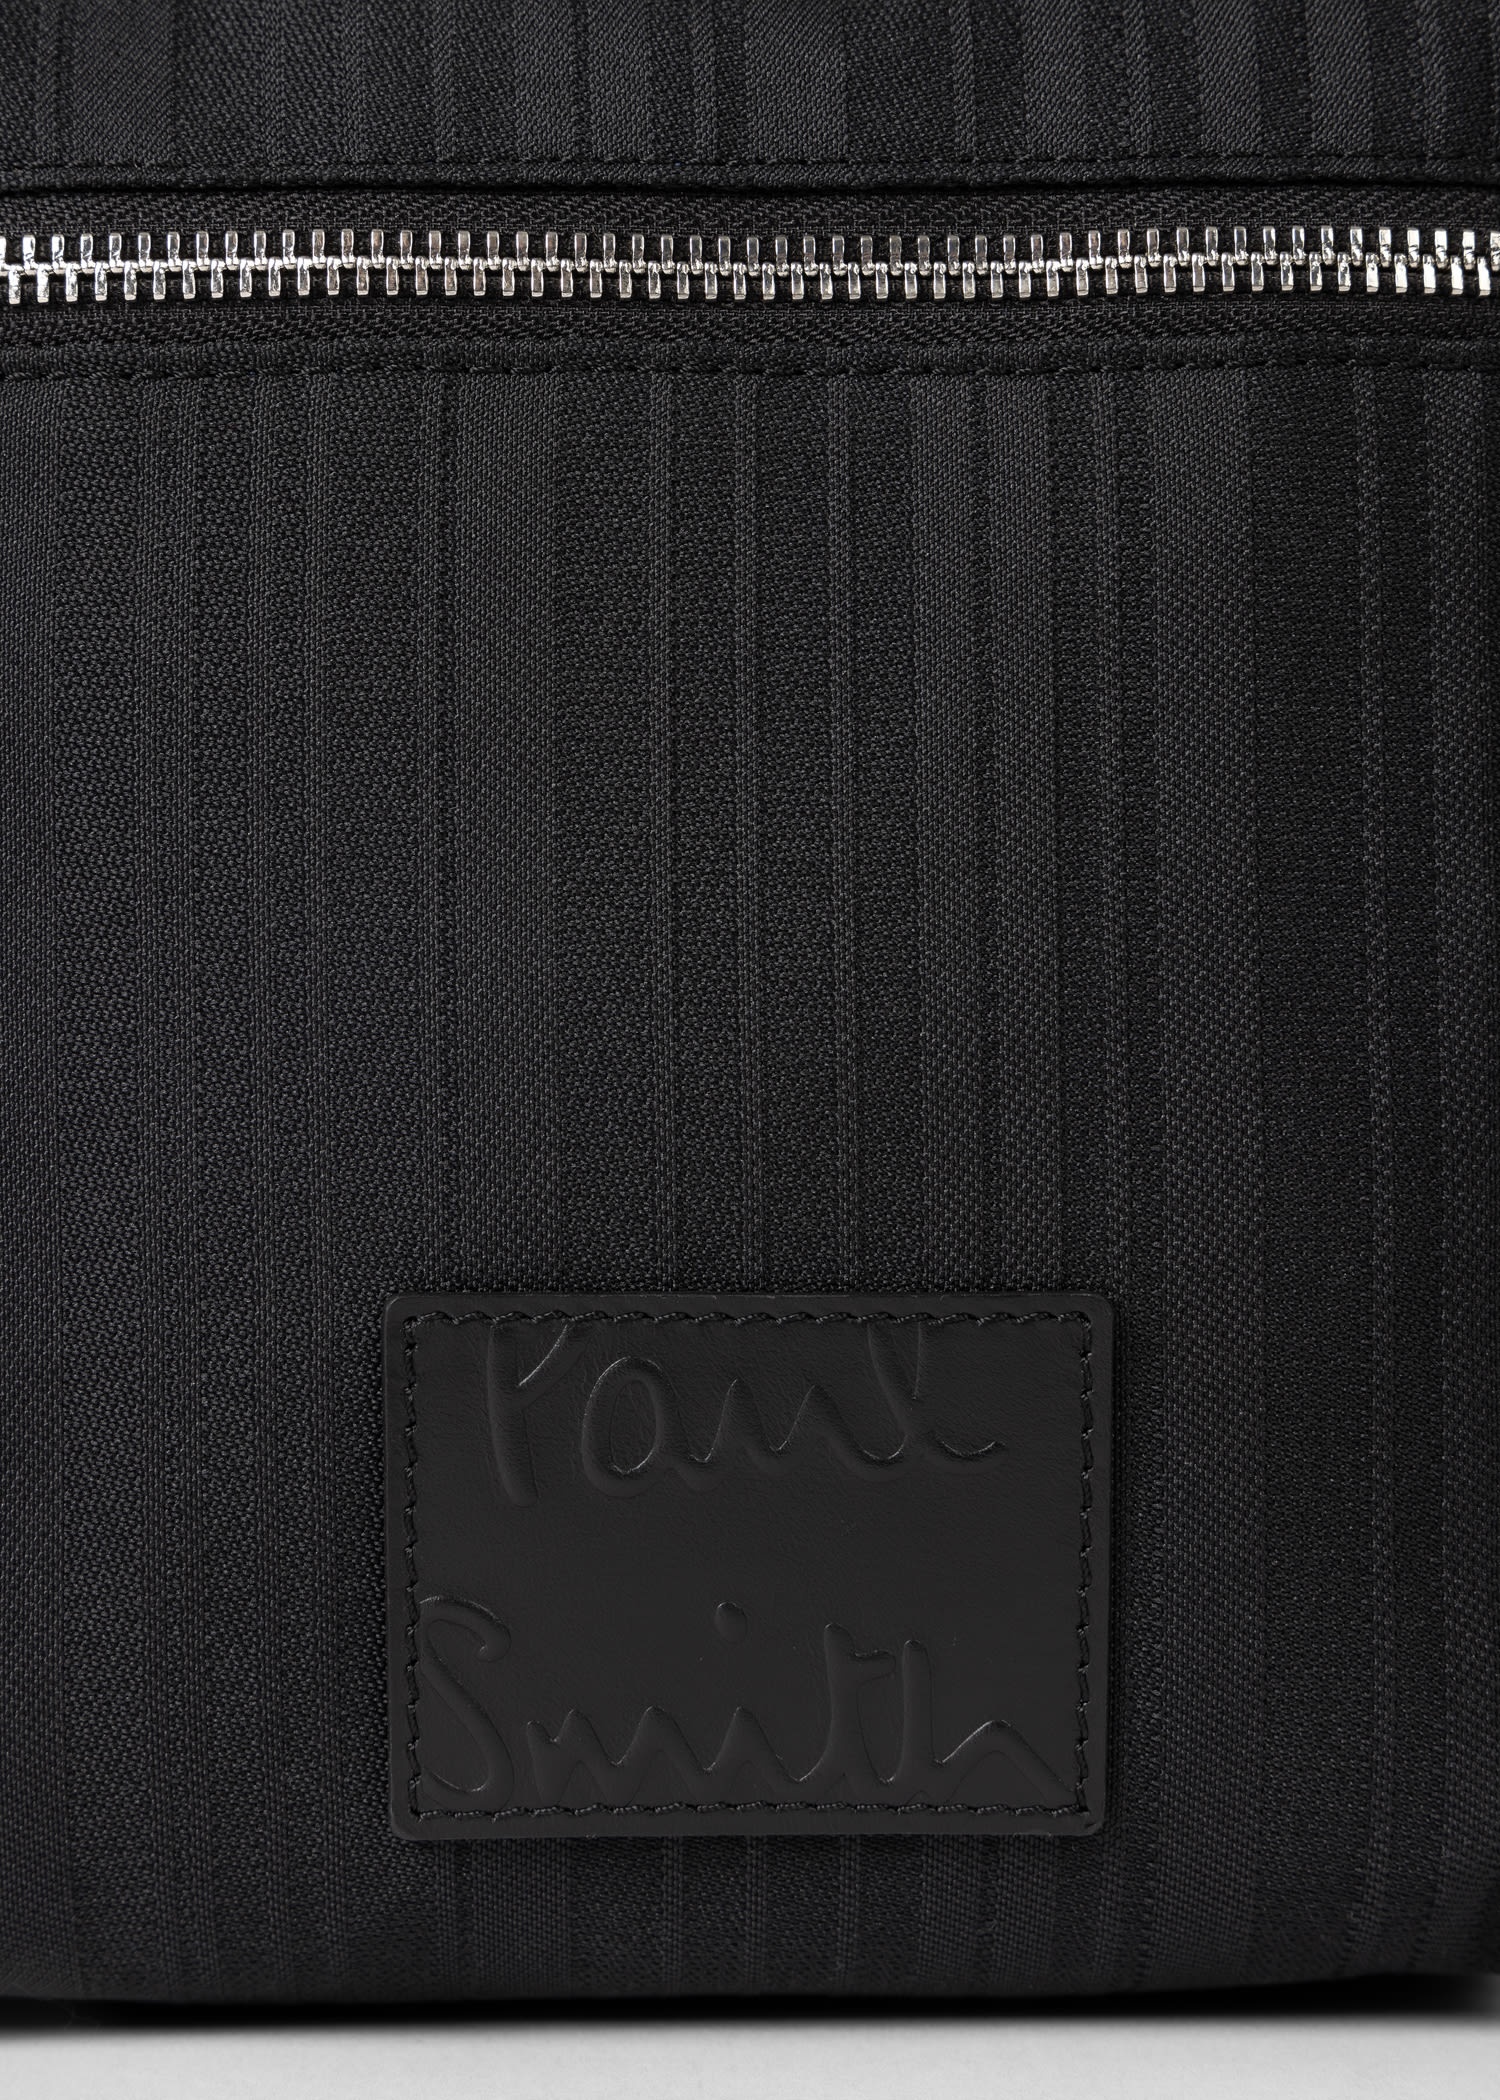 Paul Smith Logo-stripe Zipped Phone Crossbody Bag in Black